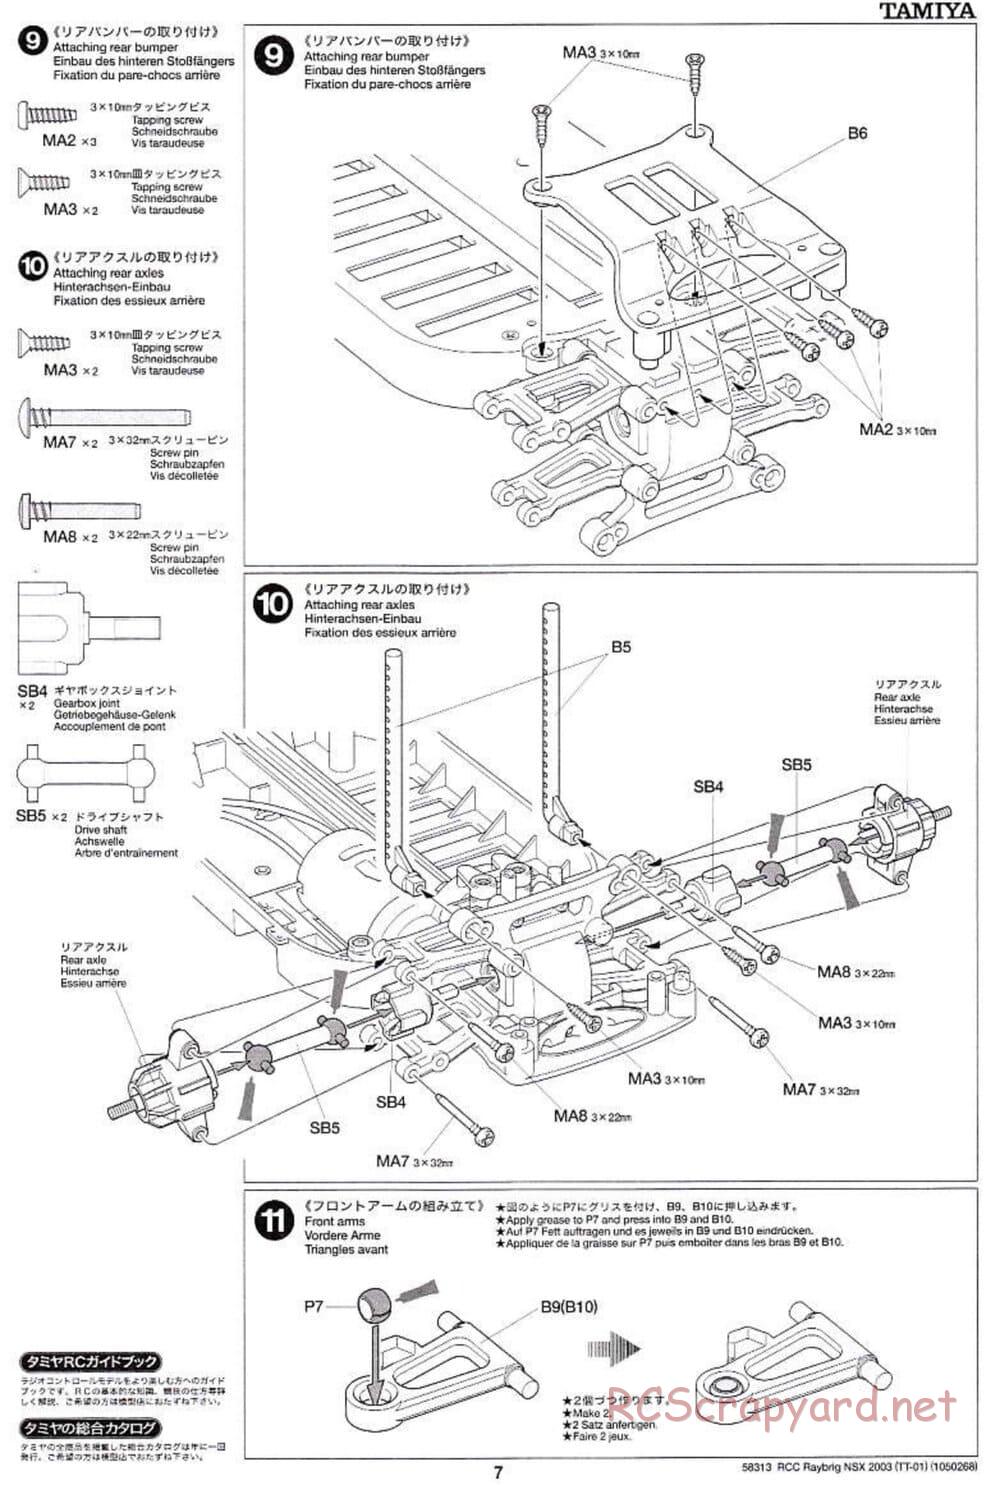 Tamiya - Raybrig NSX 2003 - TT-01 Chassis - Manual - Page 7